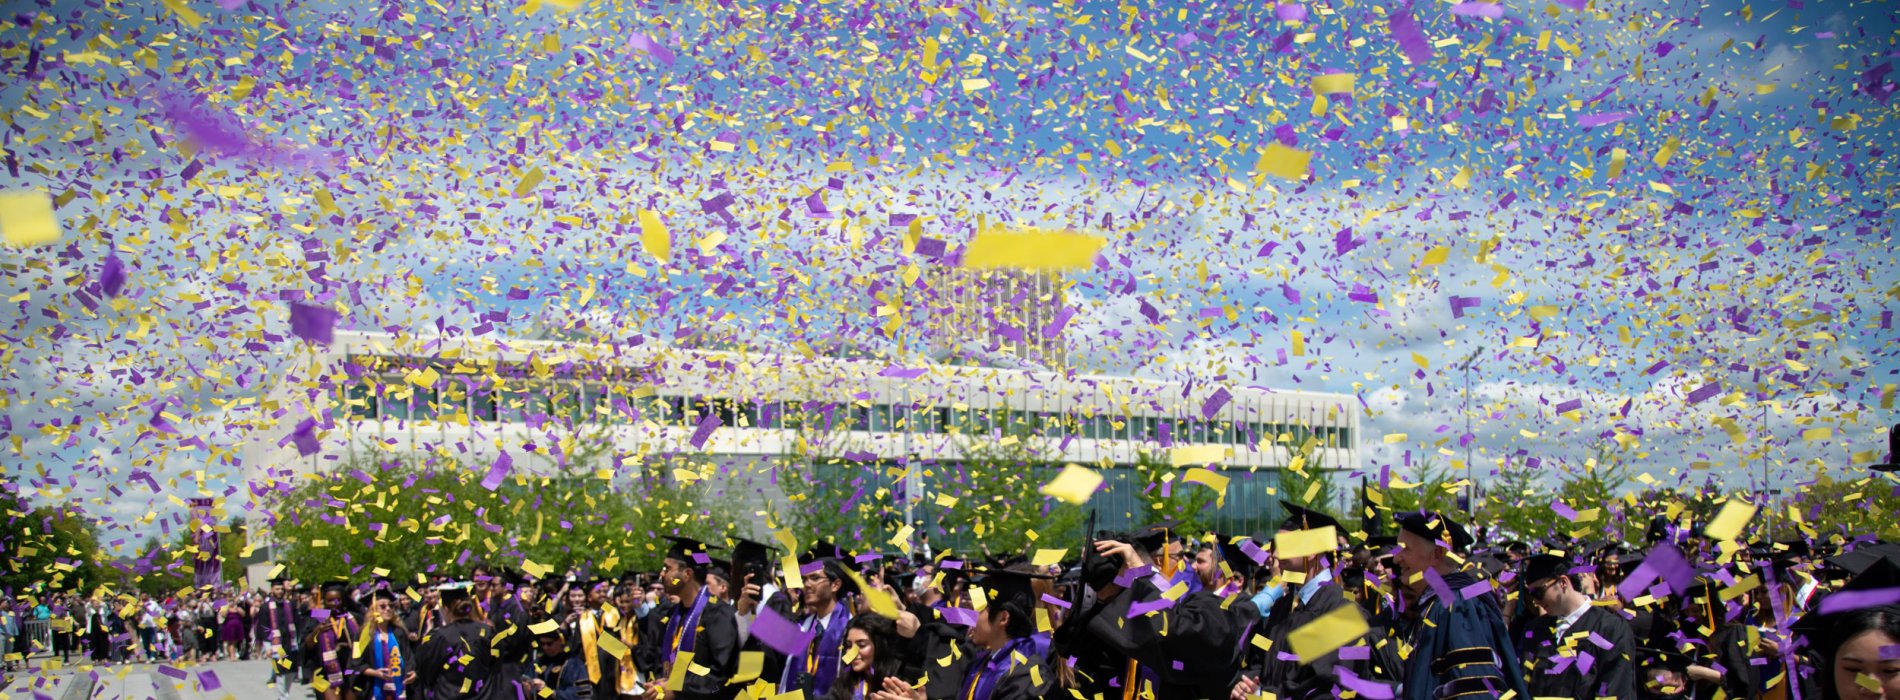 Purple and yellow confetti falls upon celebrating UAlbany graduates in Commencement regalia.